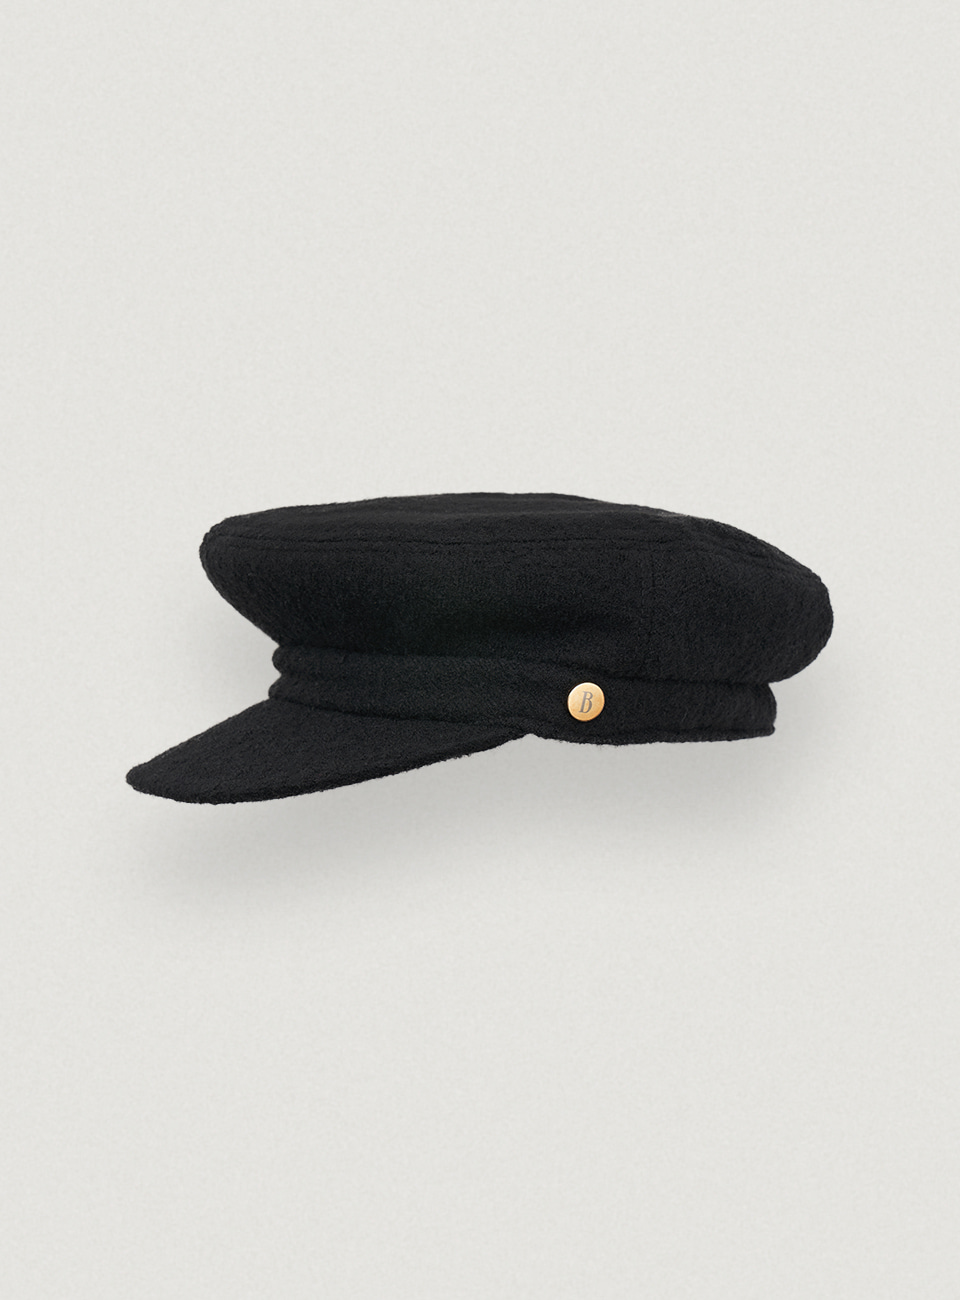 Black Margot Wool Hat by STYLEM